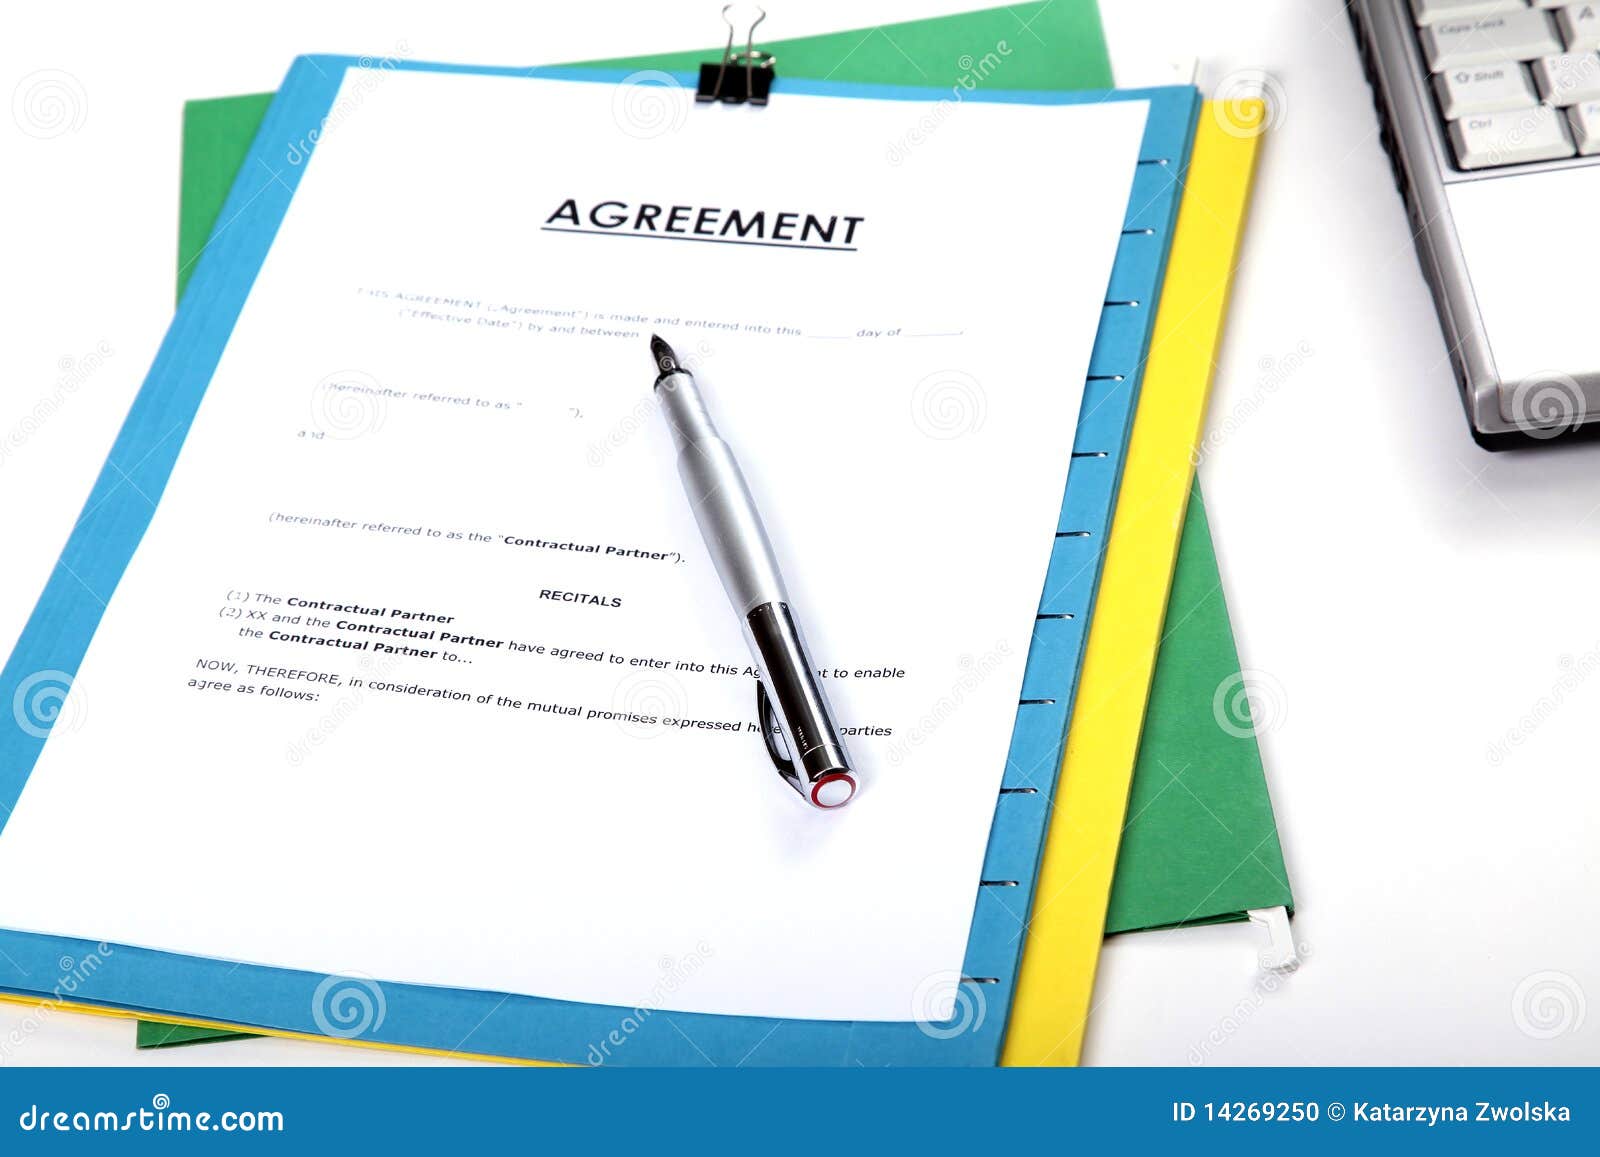 pen on agreement